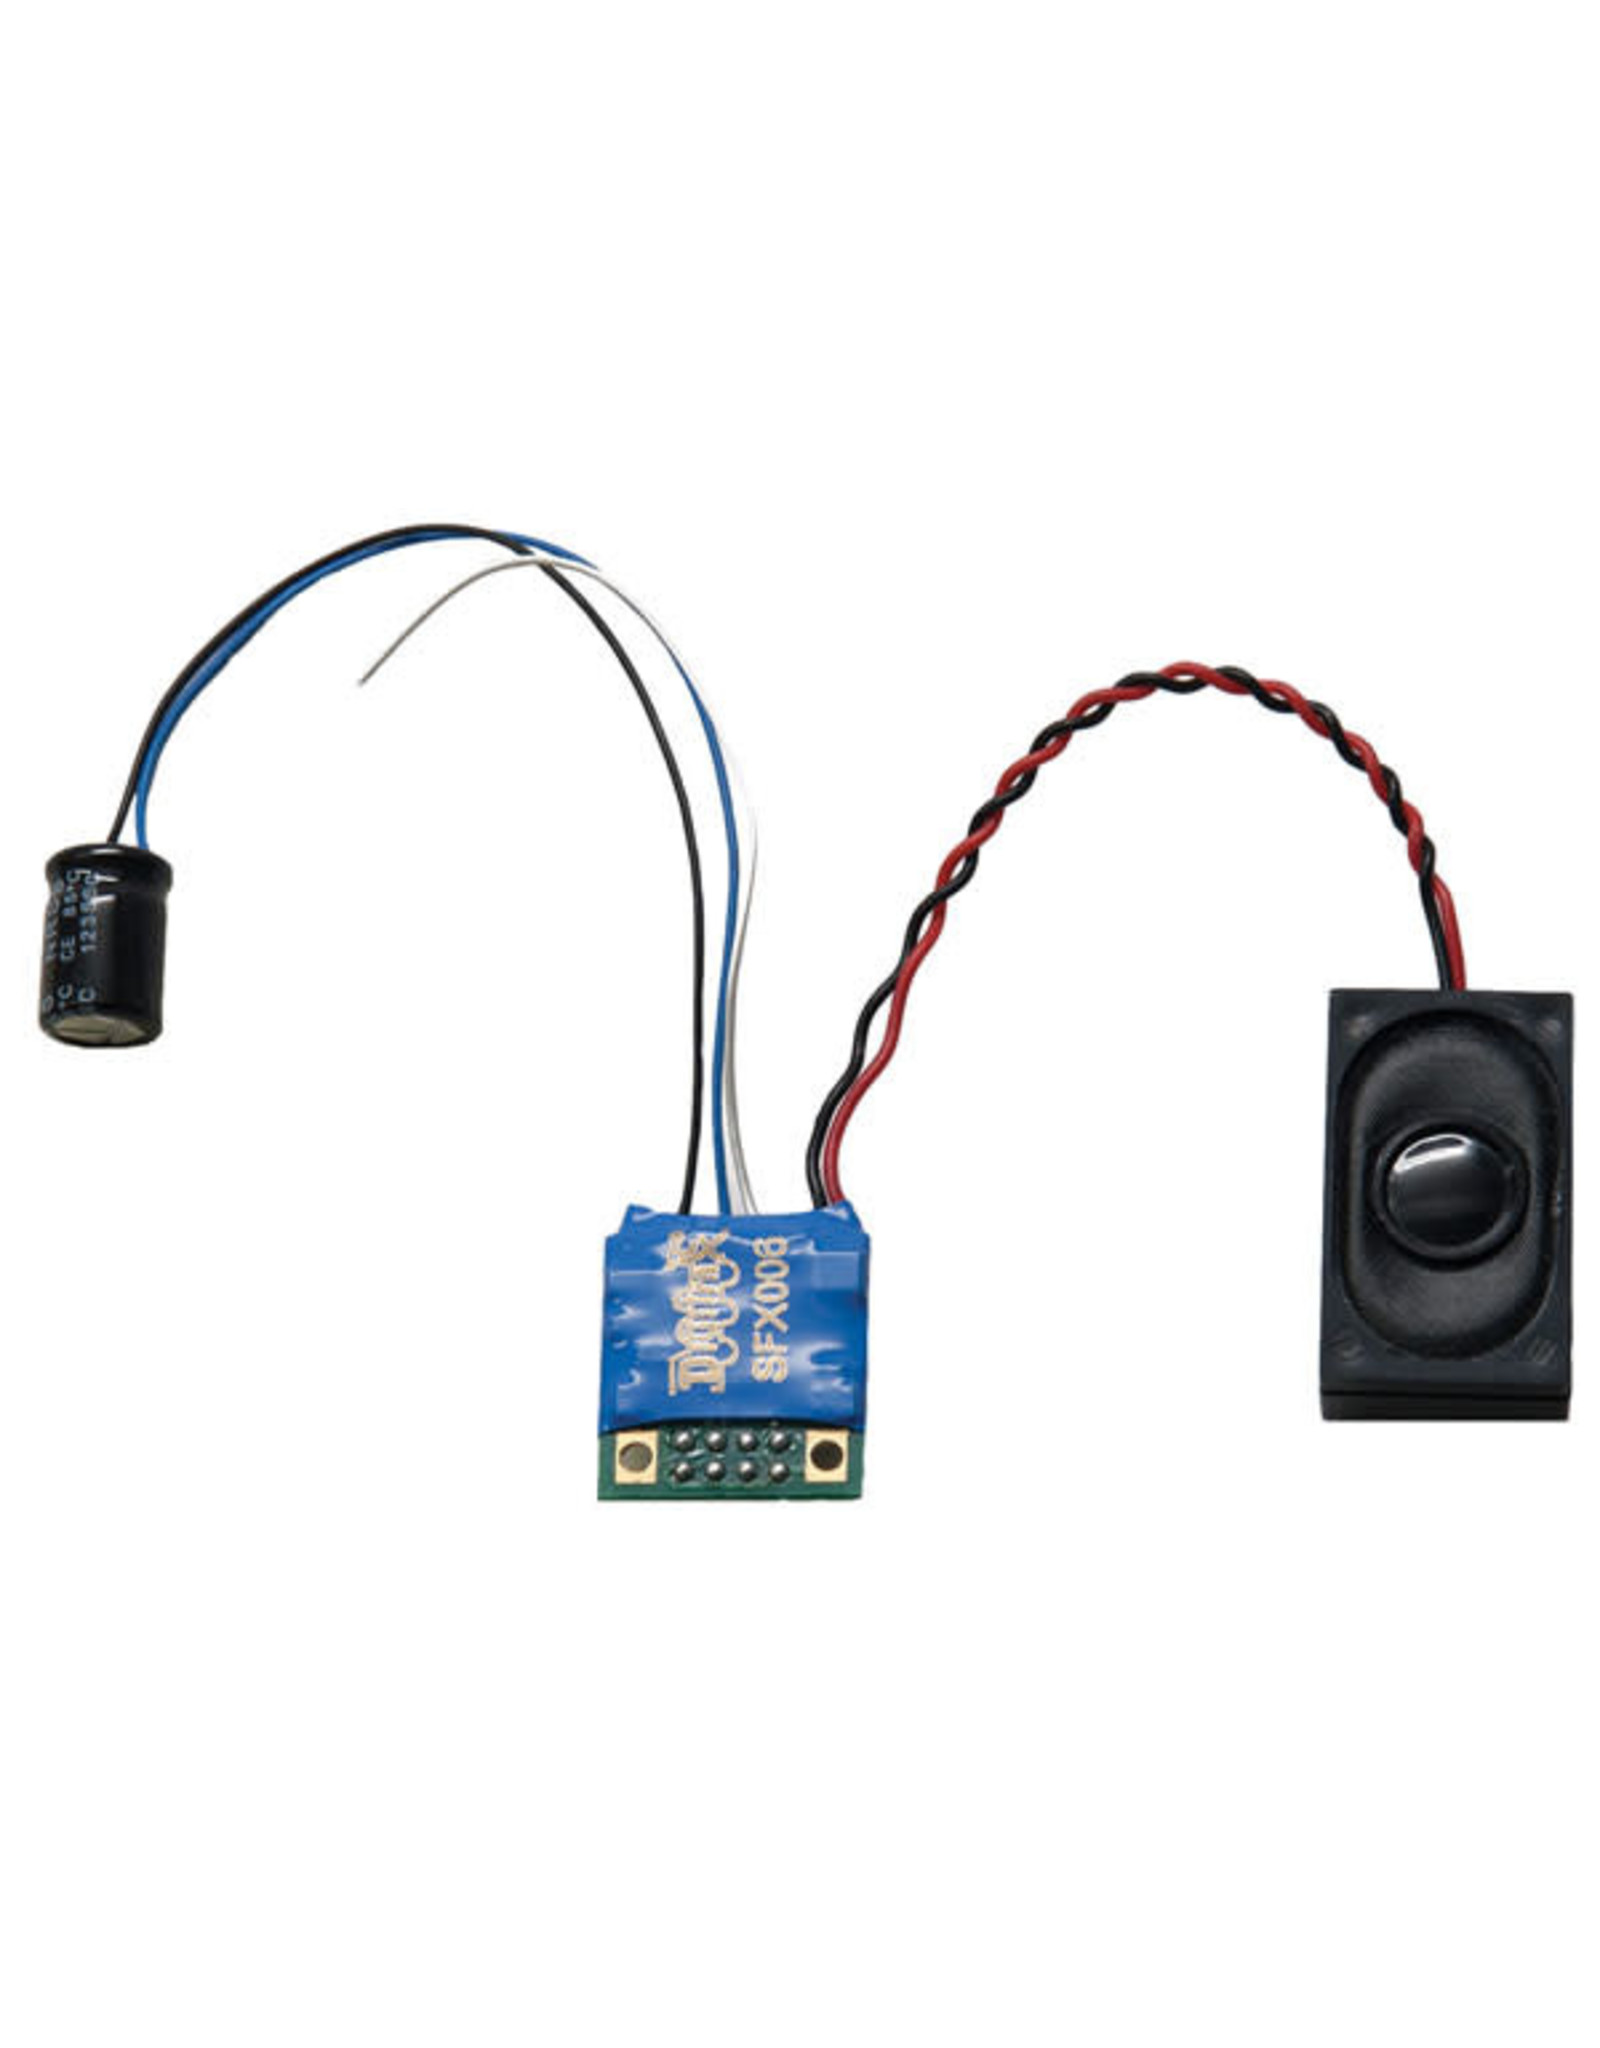 Digitrax SFX006 Plug N' Play Sound-Only Decoder - SoundFX(TM) Soundbug(TM) -- With 5/8 x 1 x 3/8" 16 x 25 x 9mm Box Speaker & 330uF Capacitor